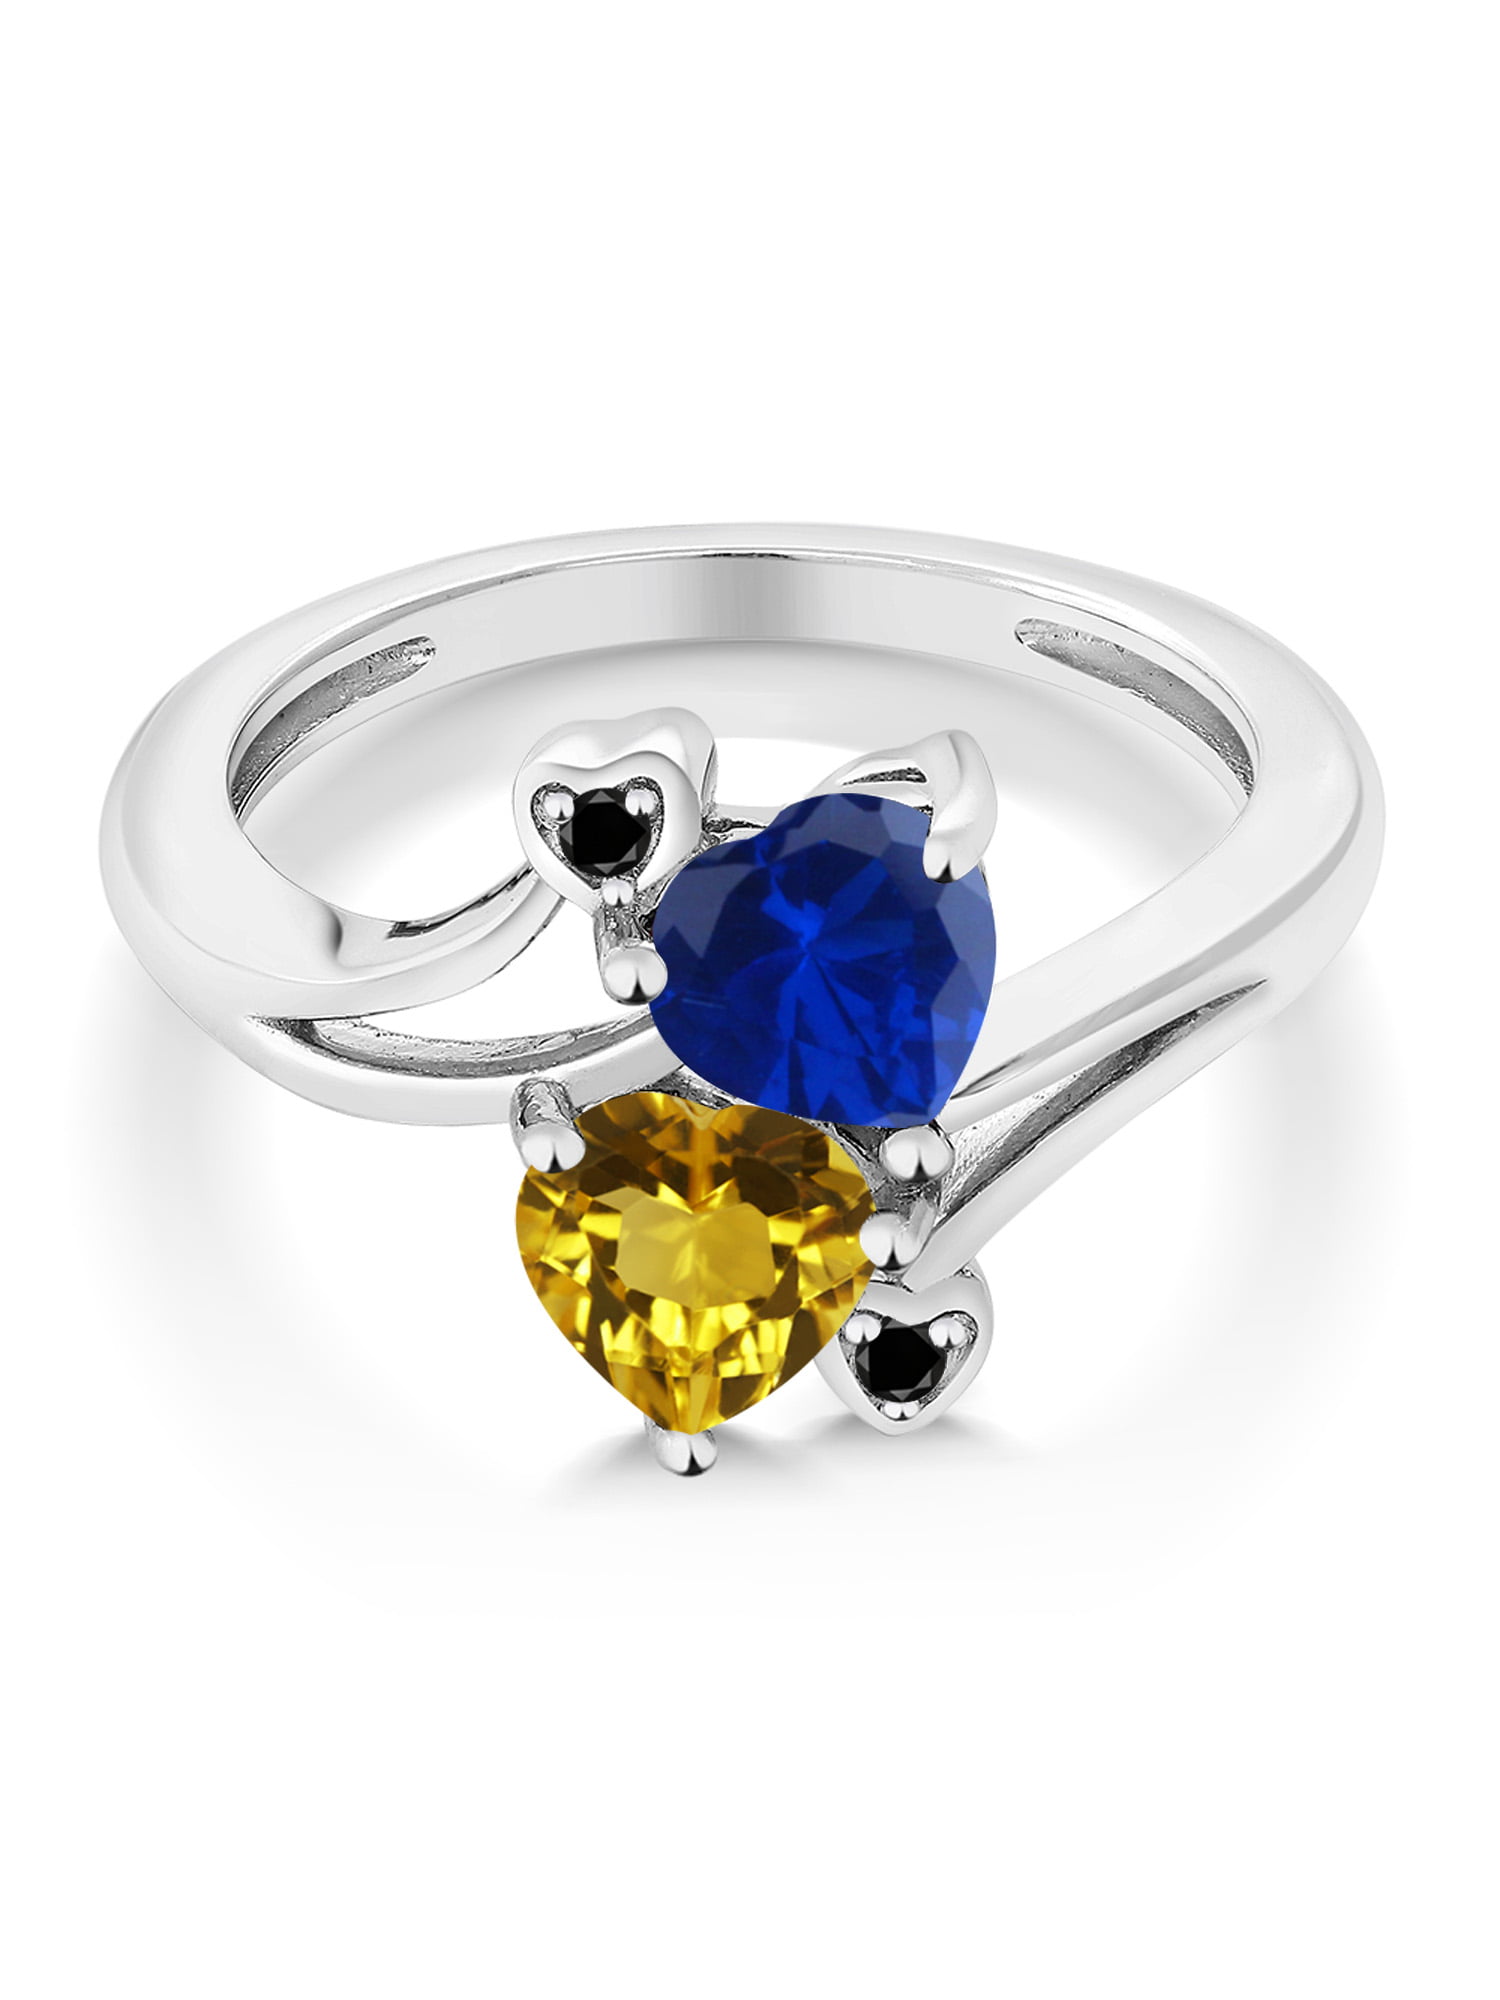 Gem Stone King 1.53 Ct Heart Shape Citrine Blue Created Sapphire 10K White Gold Diamond Ring Available 5,6,7,8,9